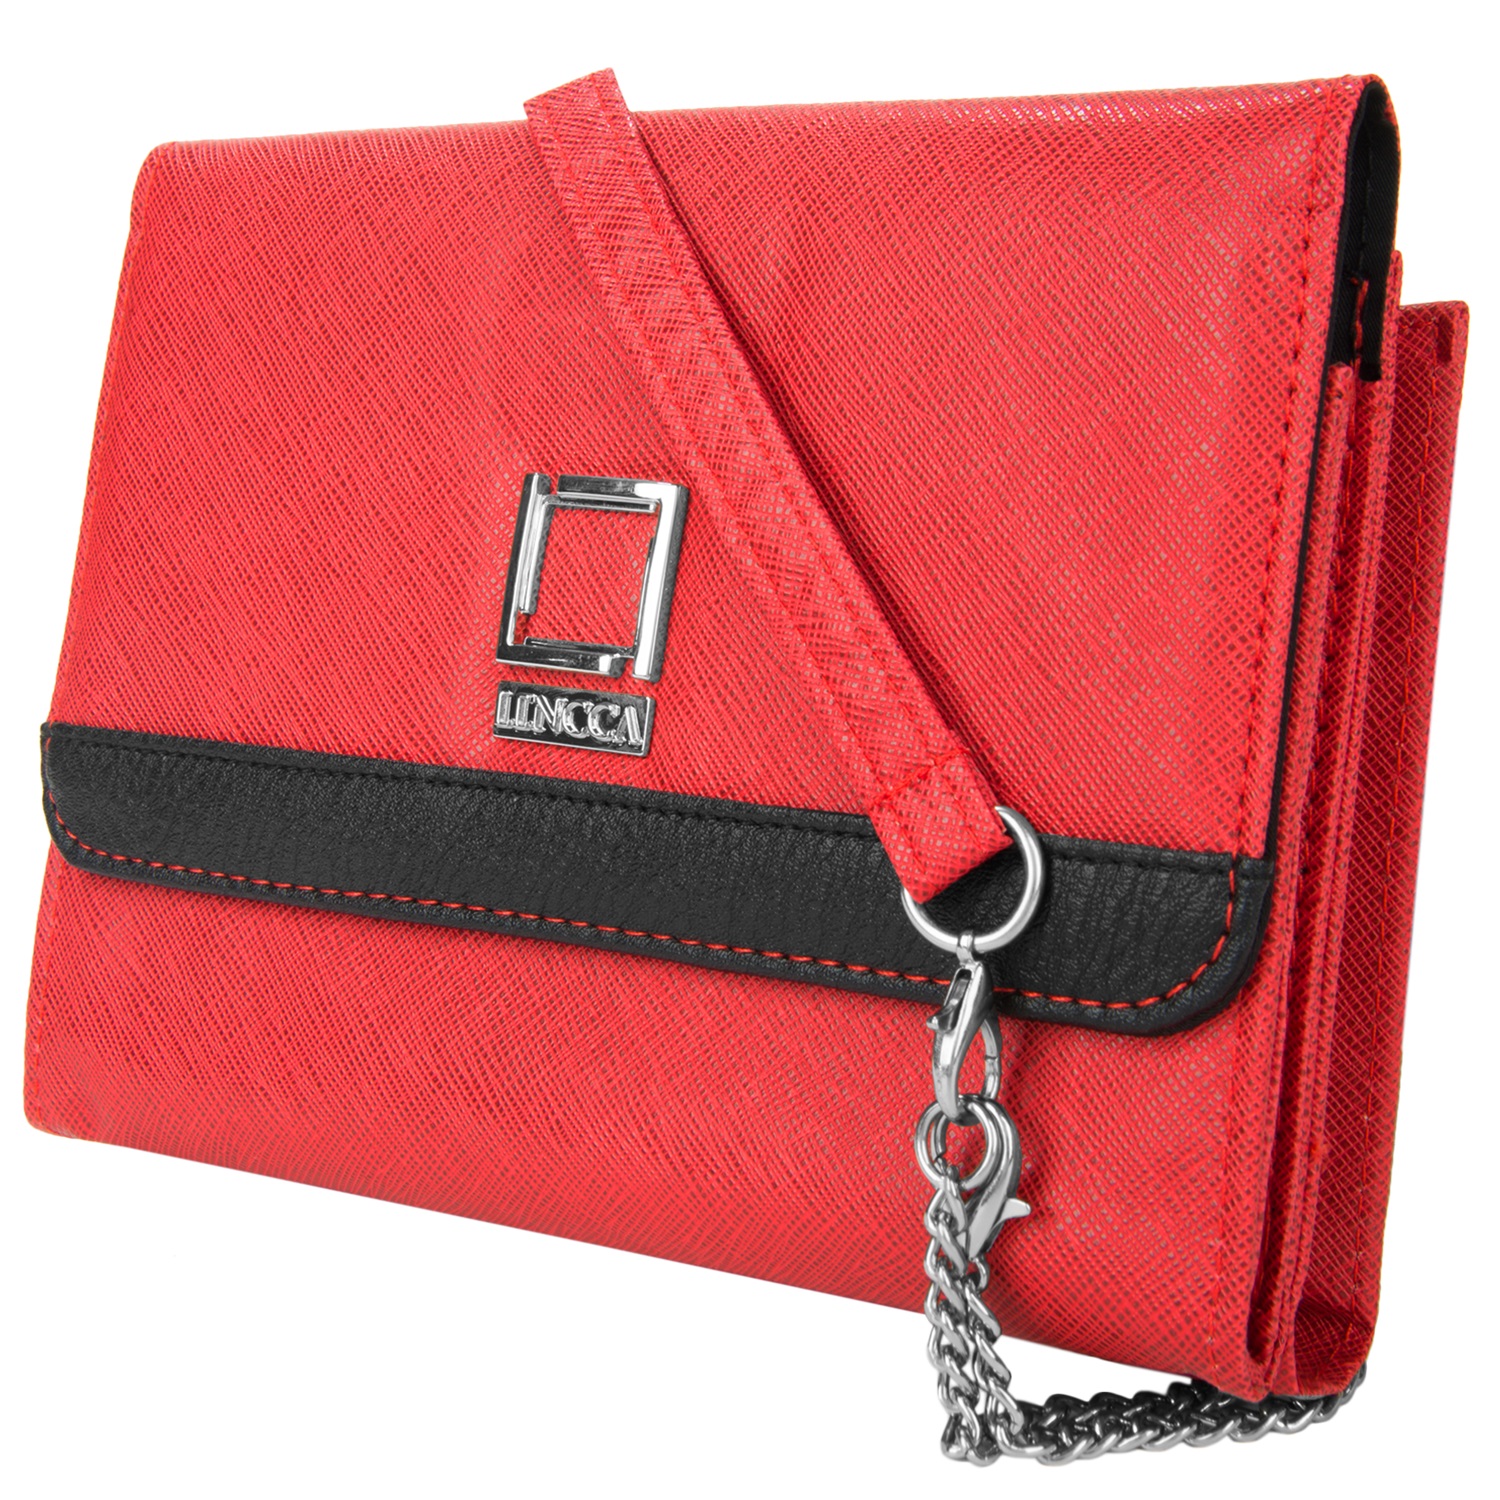 Lencca Nikina Woman’s Clutch Crossbody Fashion Handbag w/ Shoulder Strap fits Kocaso Tablets up to 7.9in x 5.25in